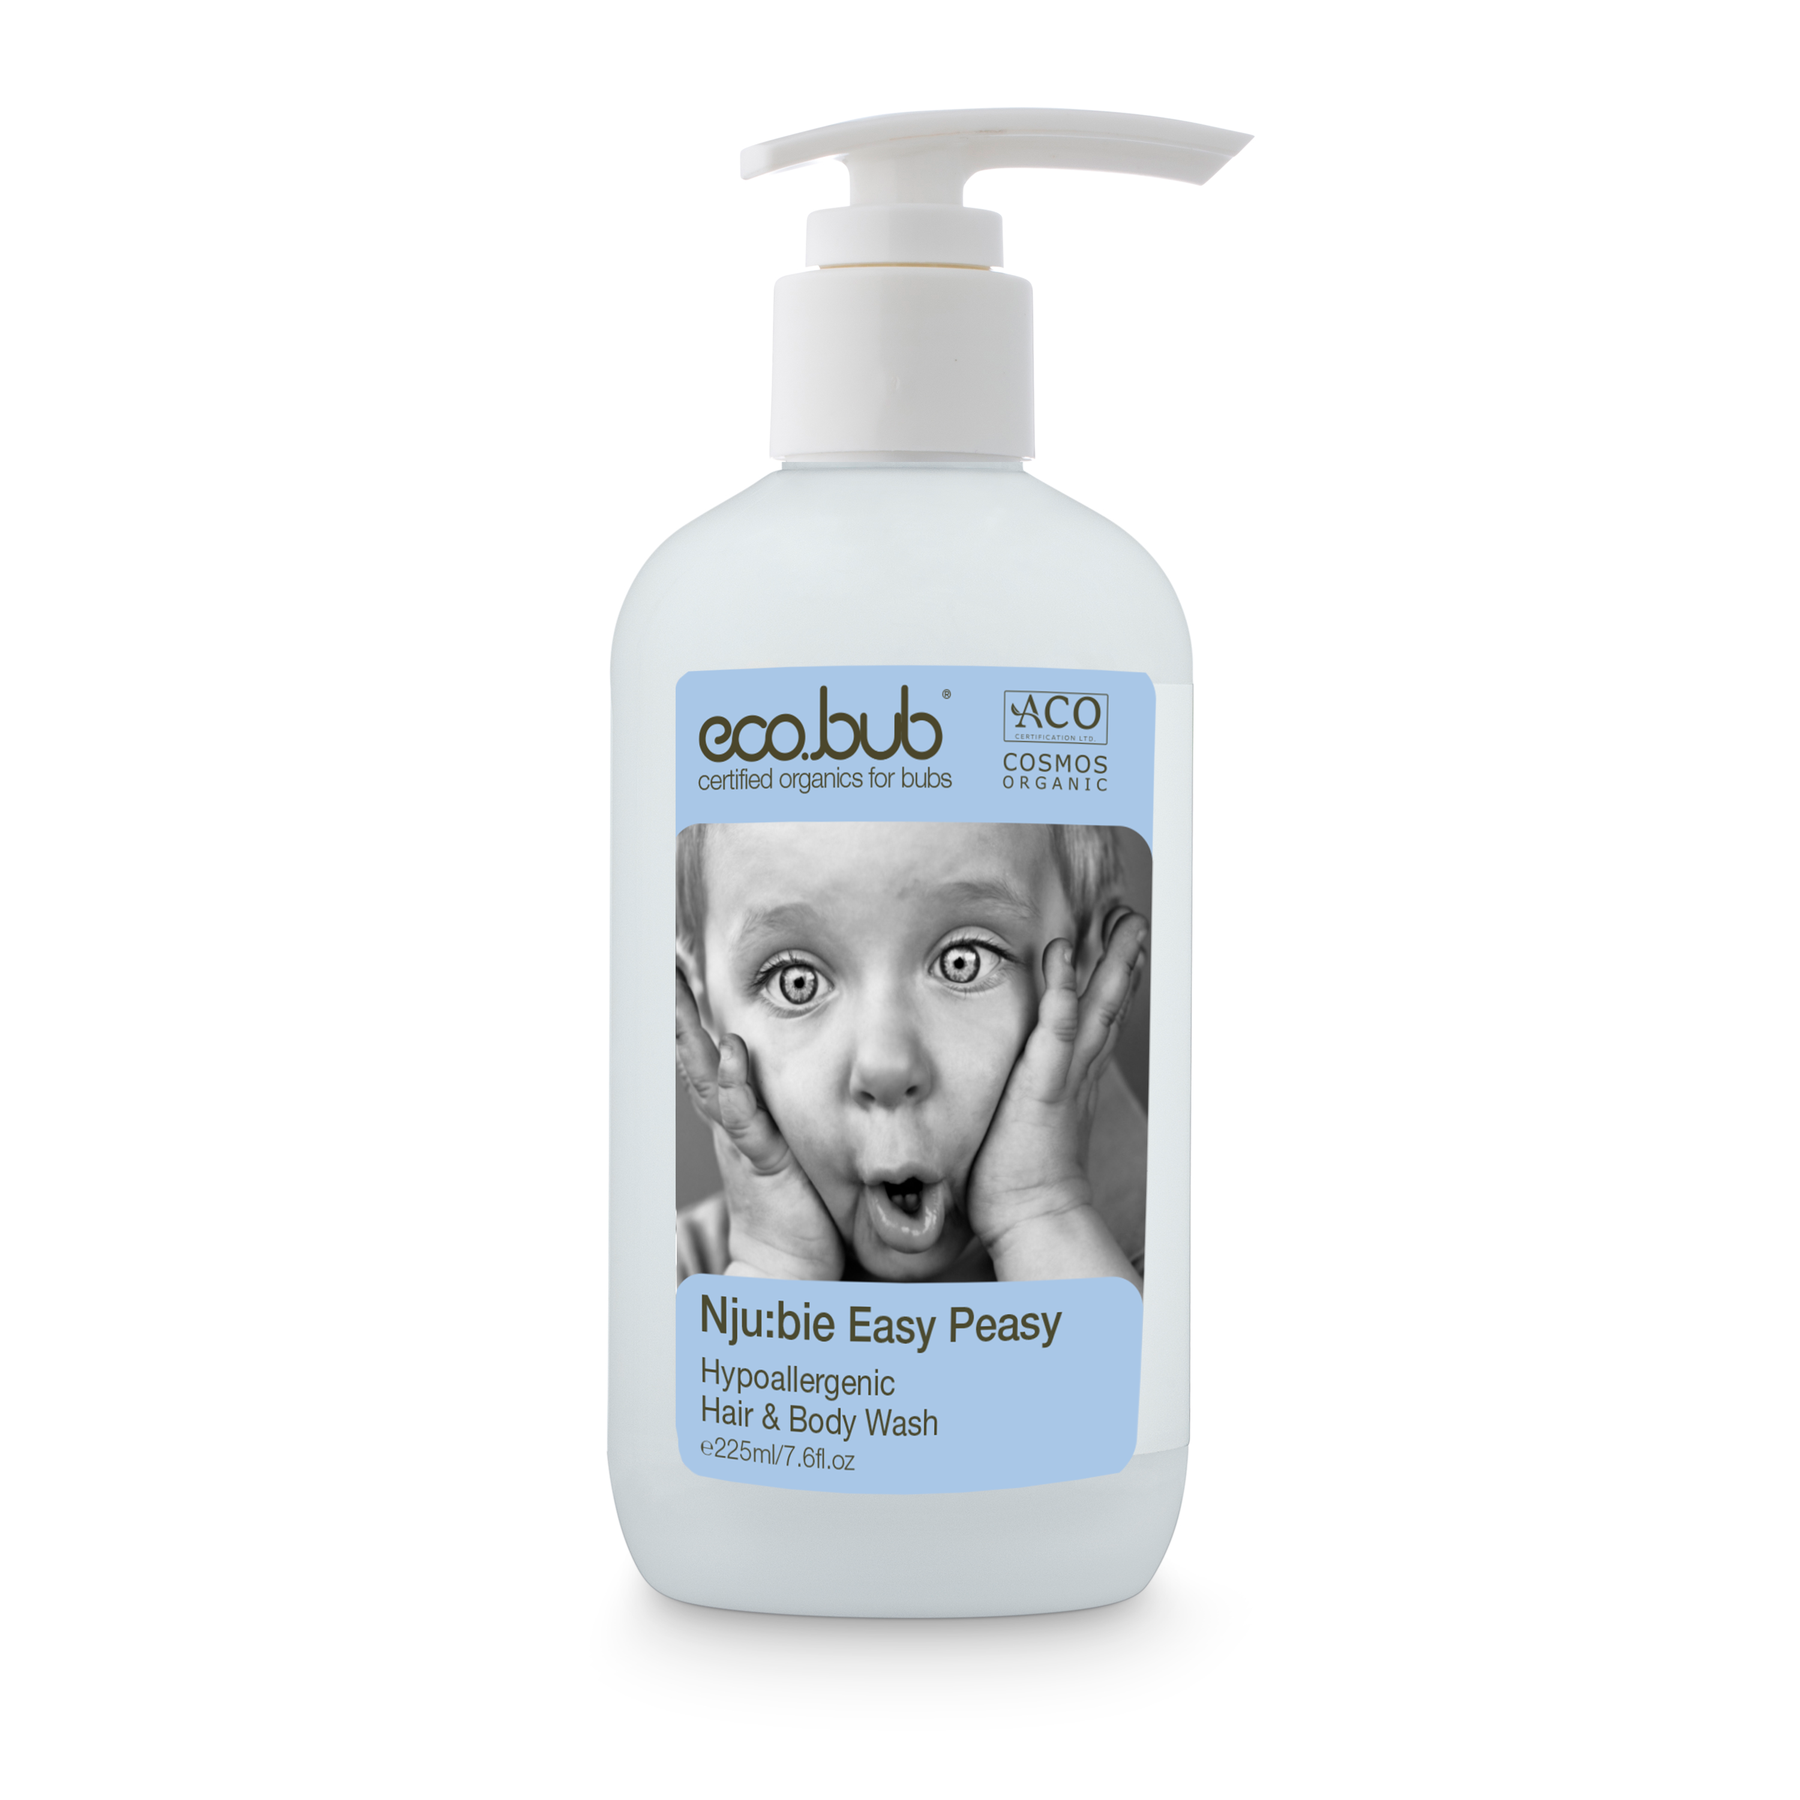 Eco.bub Nju:bie Easy Peasy Hair & Body Wash